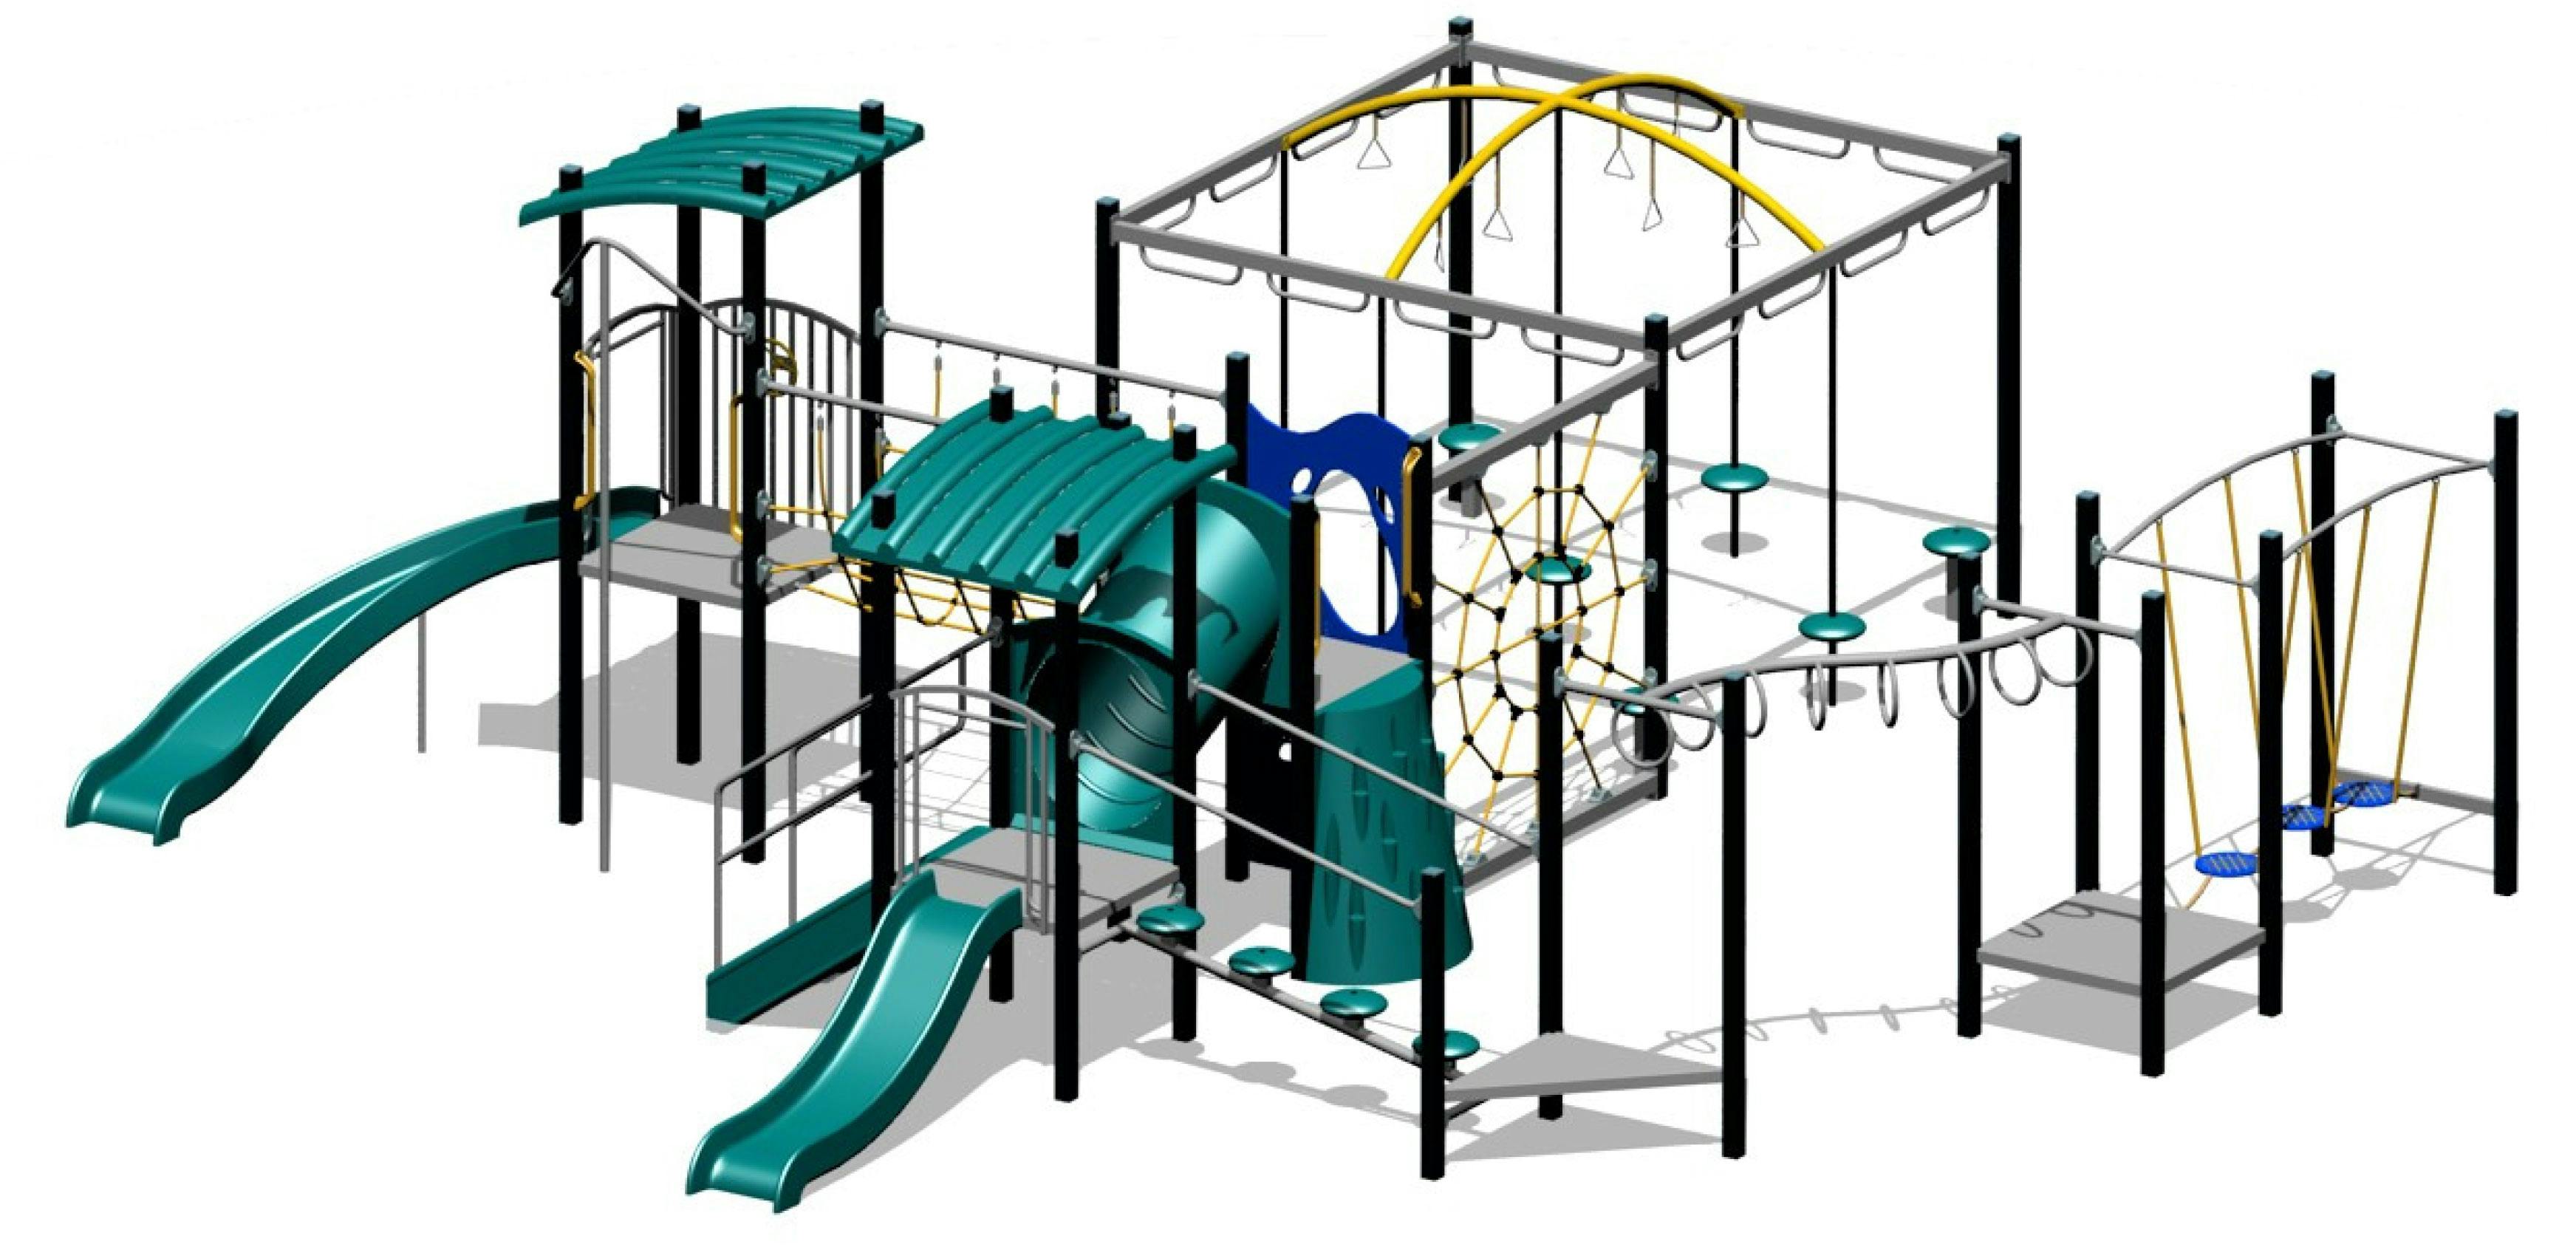 Kewel Court playground 